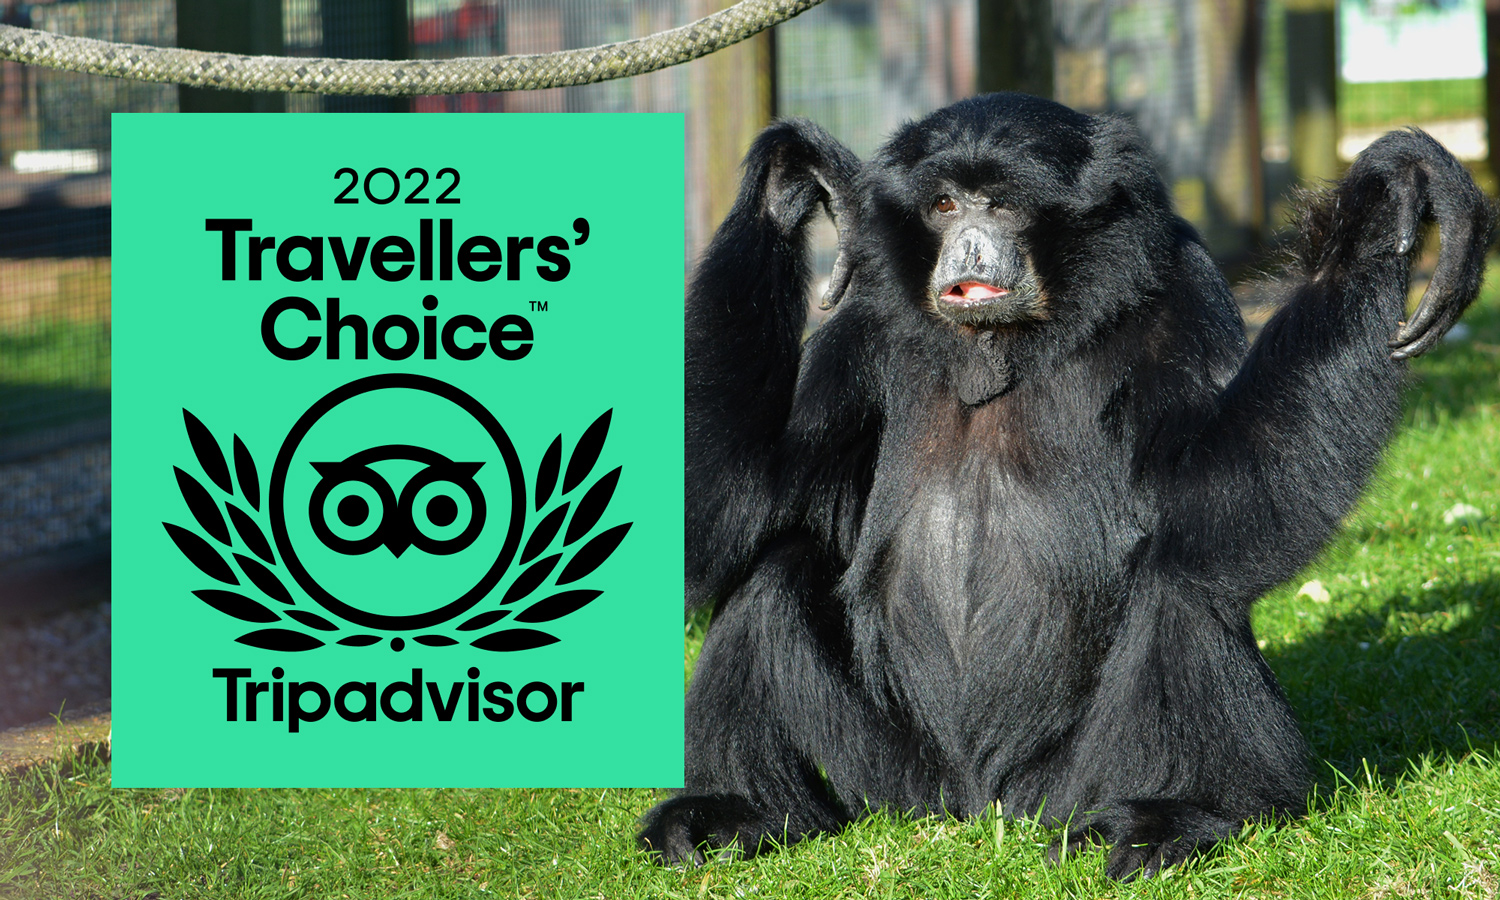 TripAdvisor Travellers' Choice 2022 award